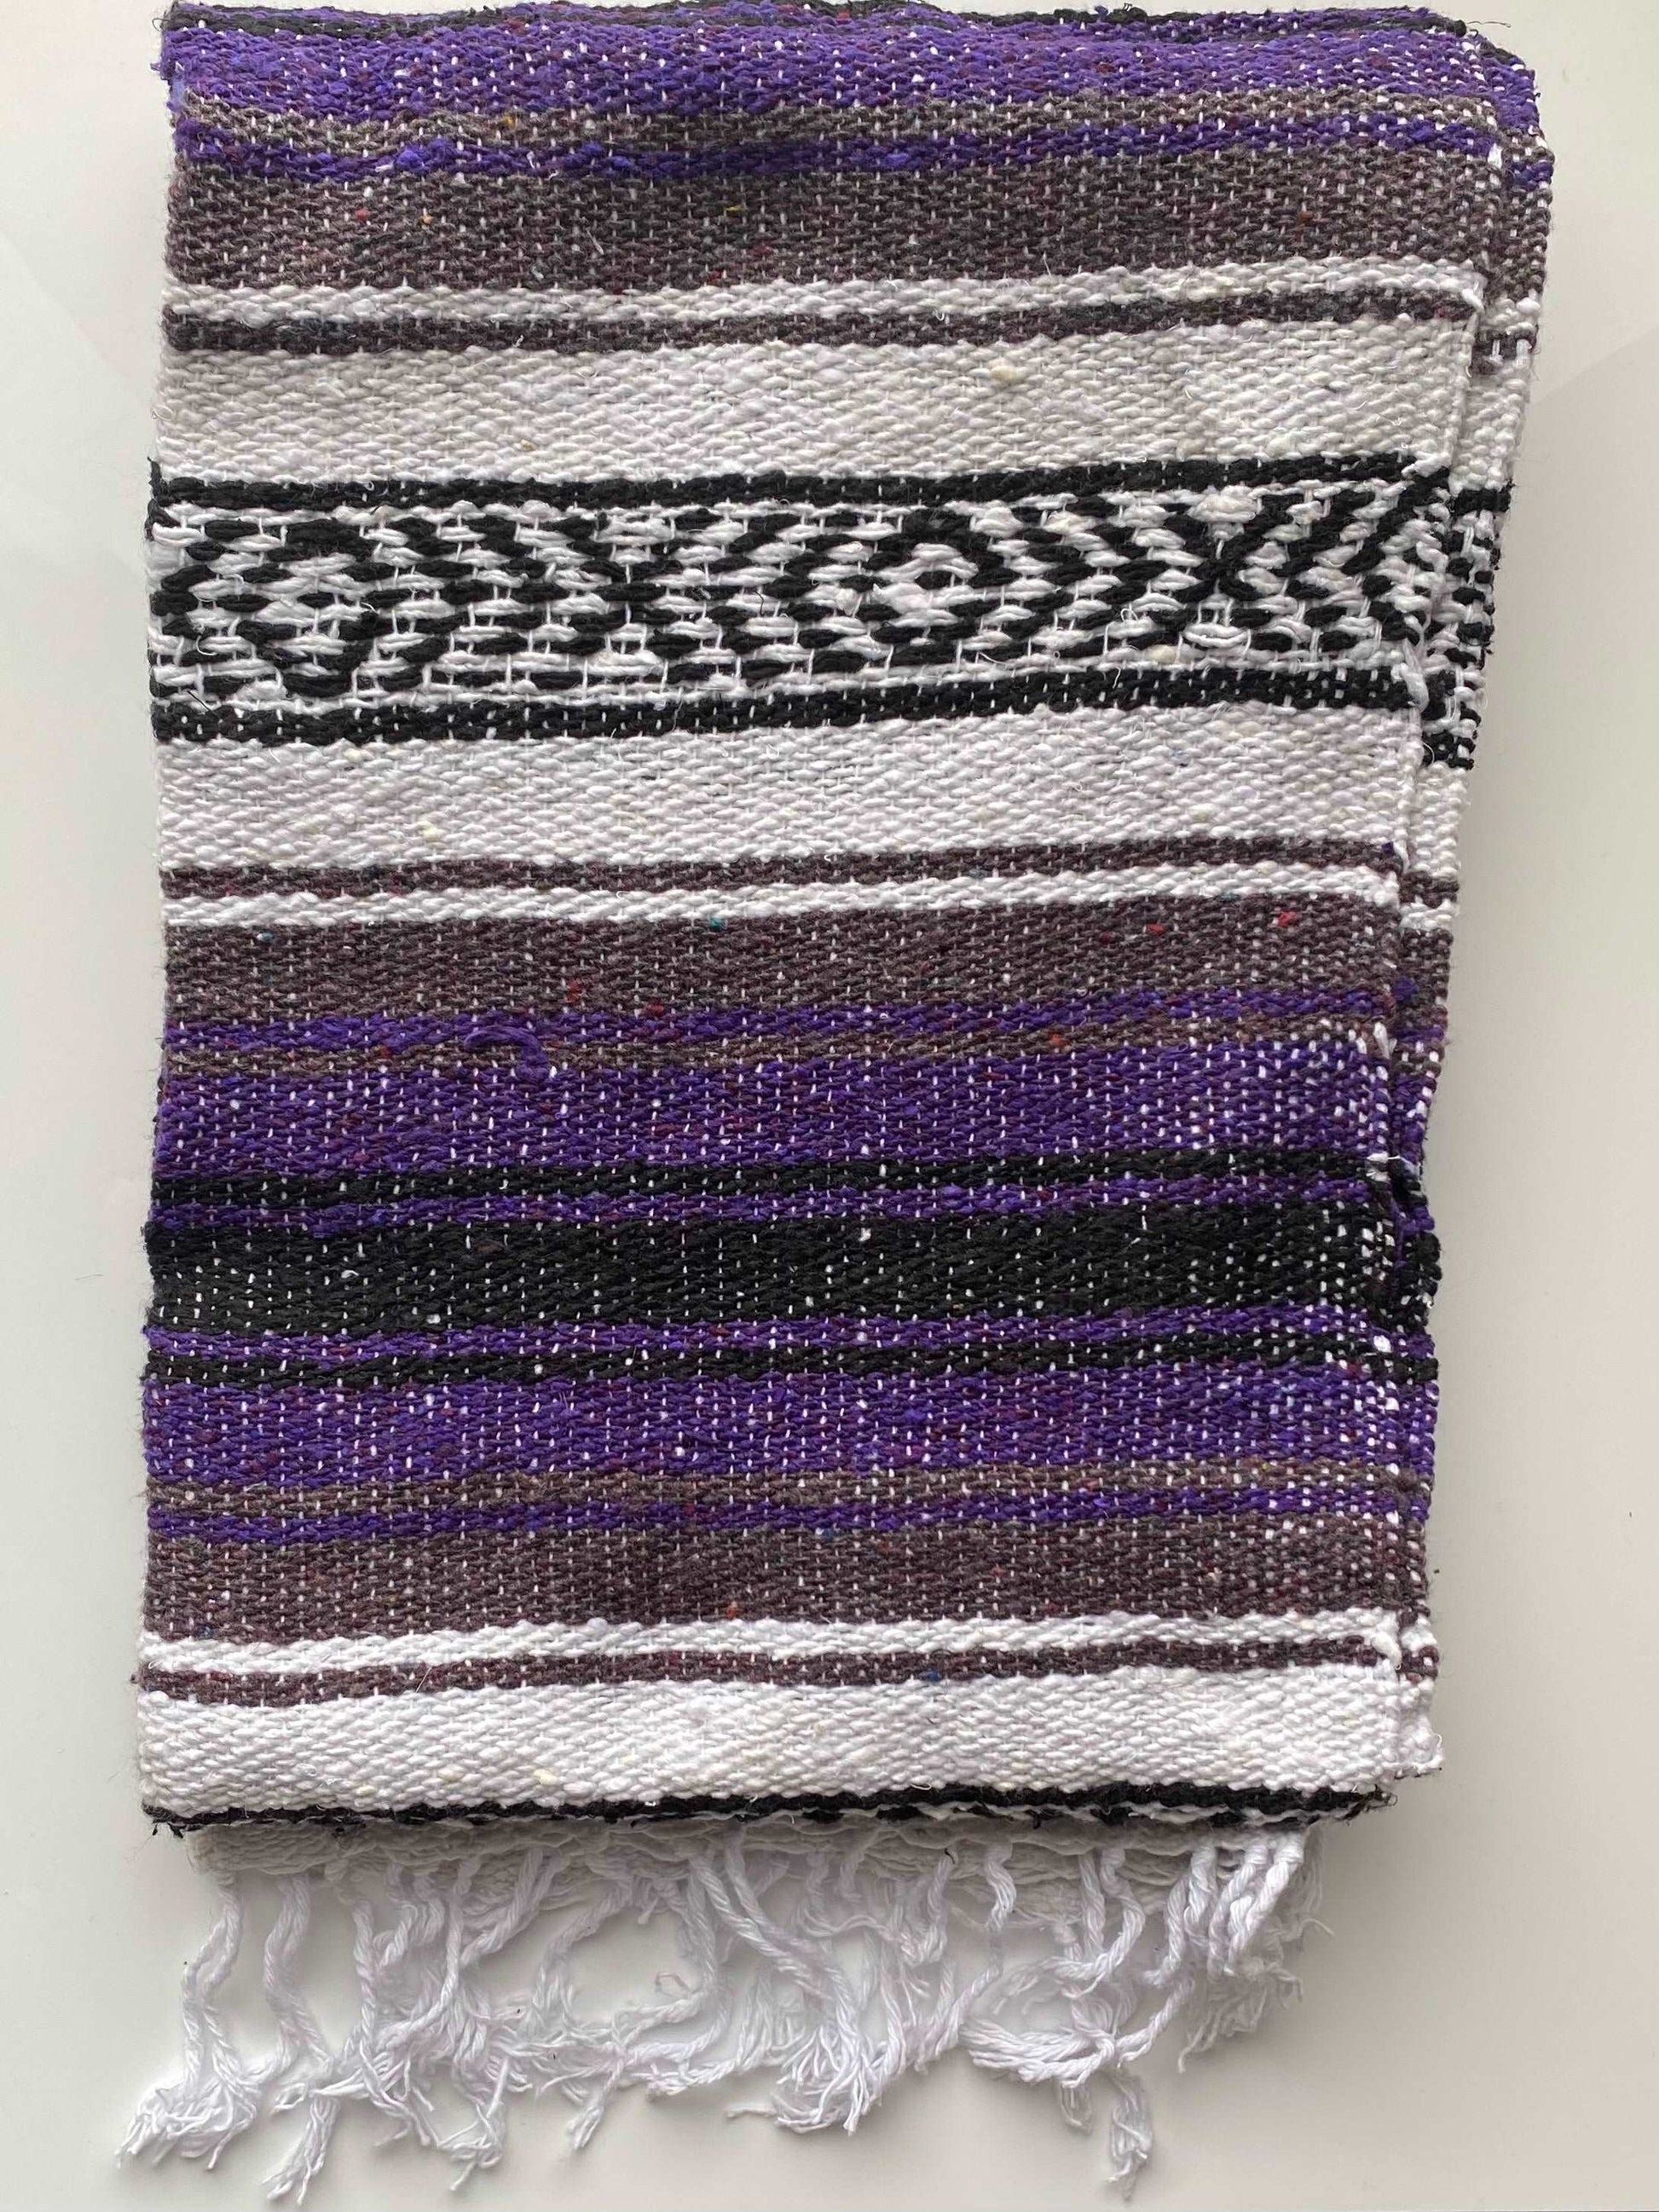 Hand Woven Falsa Mexican Blanket/Throw/Yoga Blanket (Molina Indian Blanket)